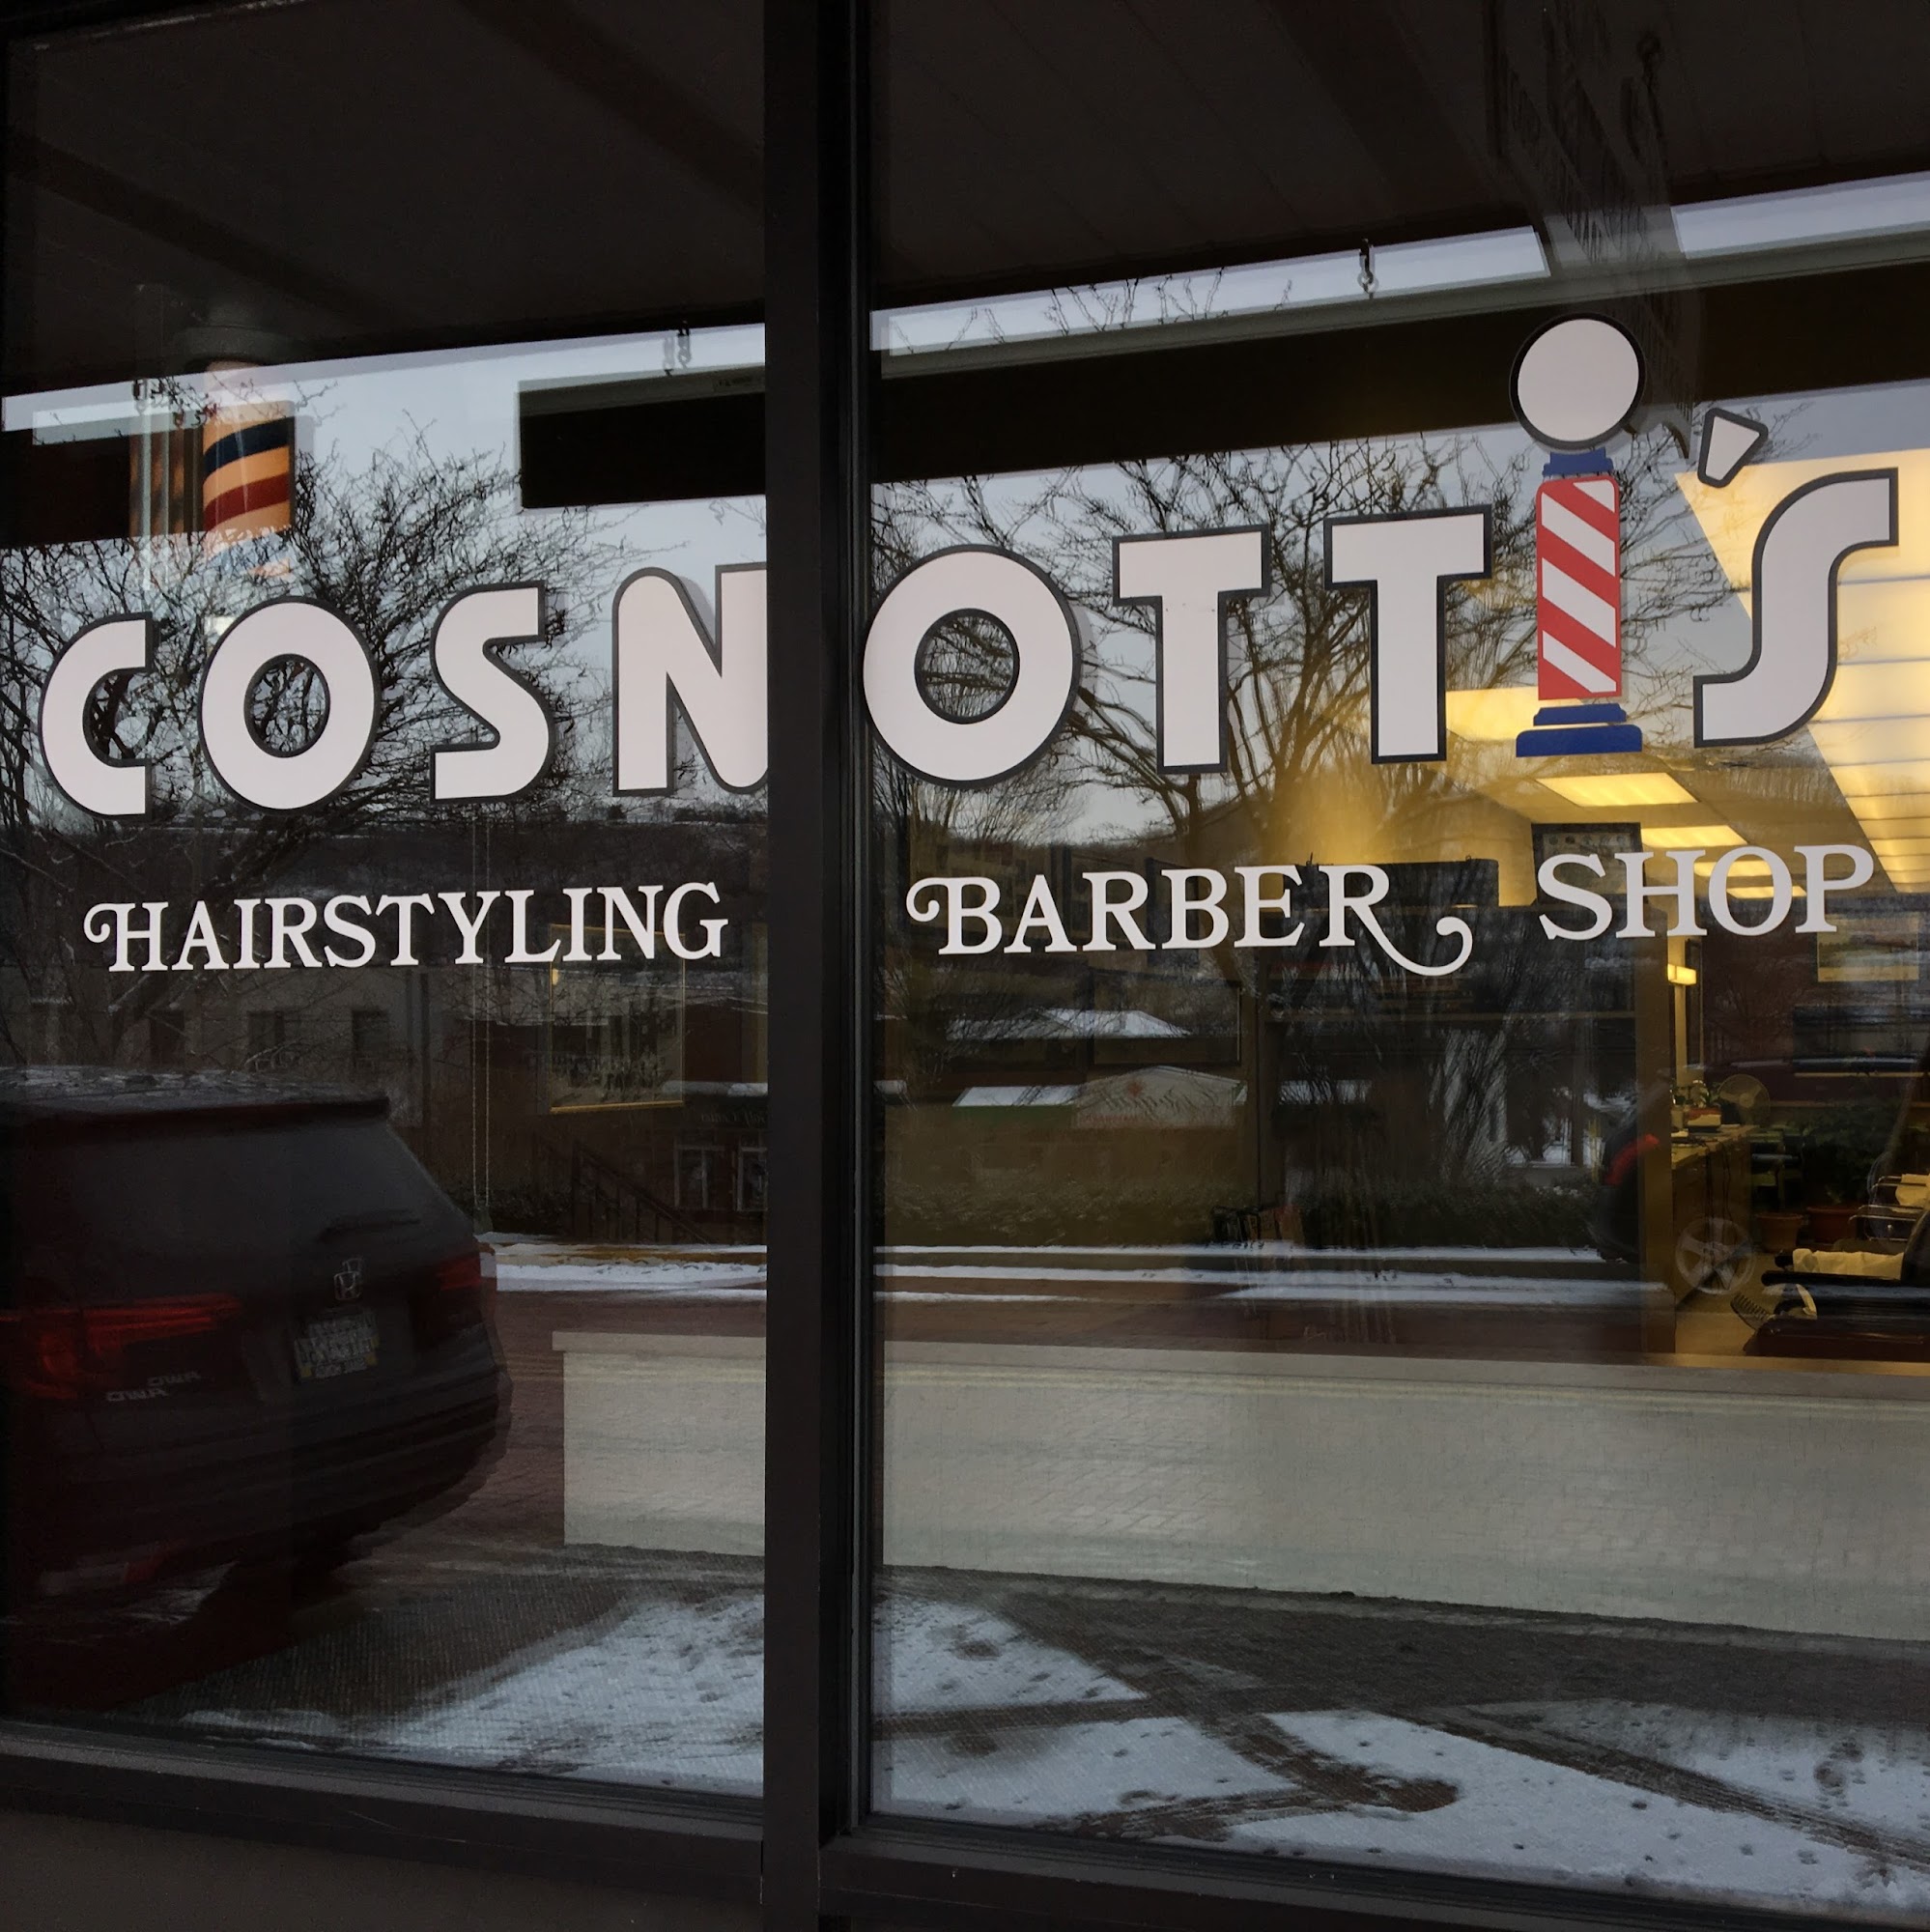 Cosnotti's Barber Shop